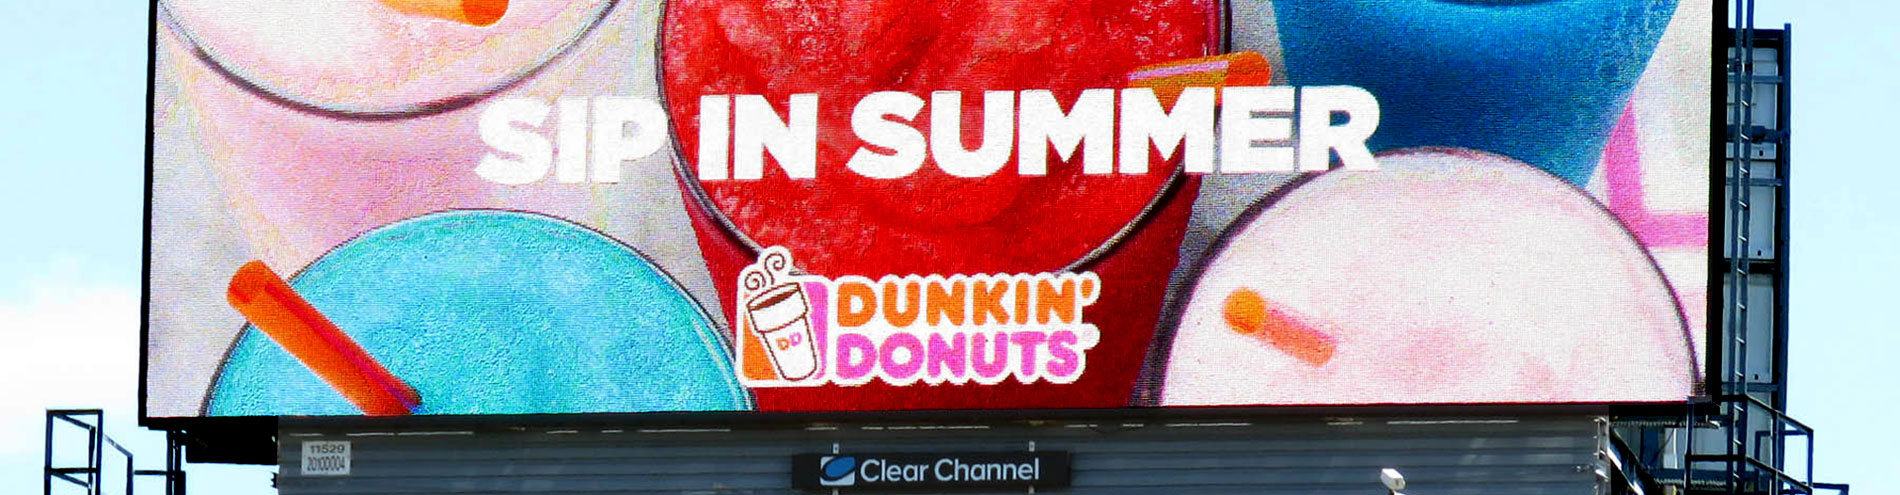 Dunkin Donuts Summer Digital Billboard